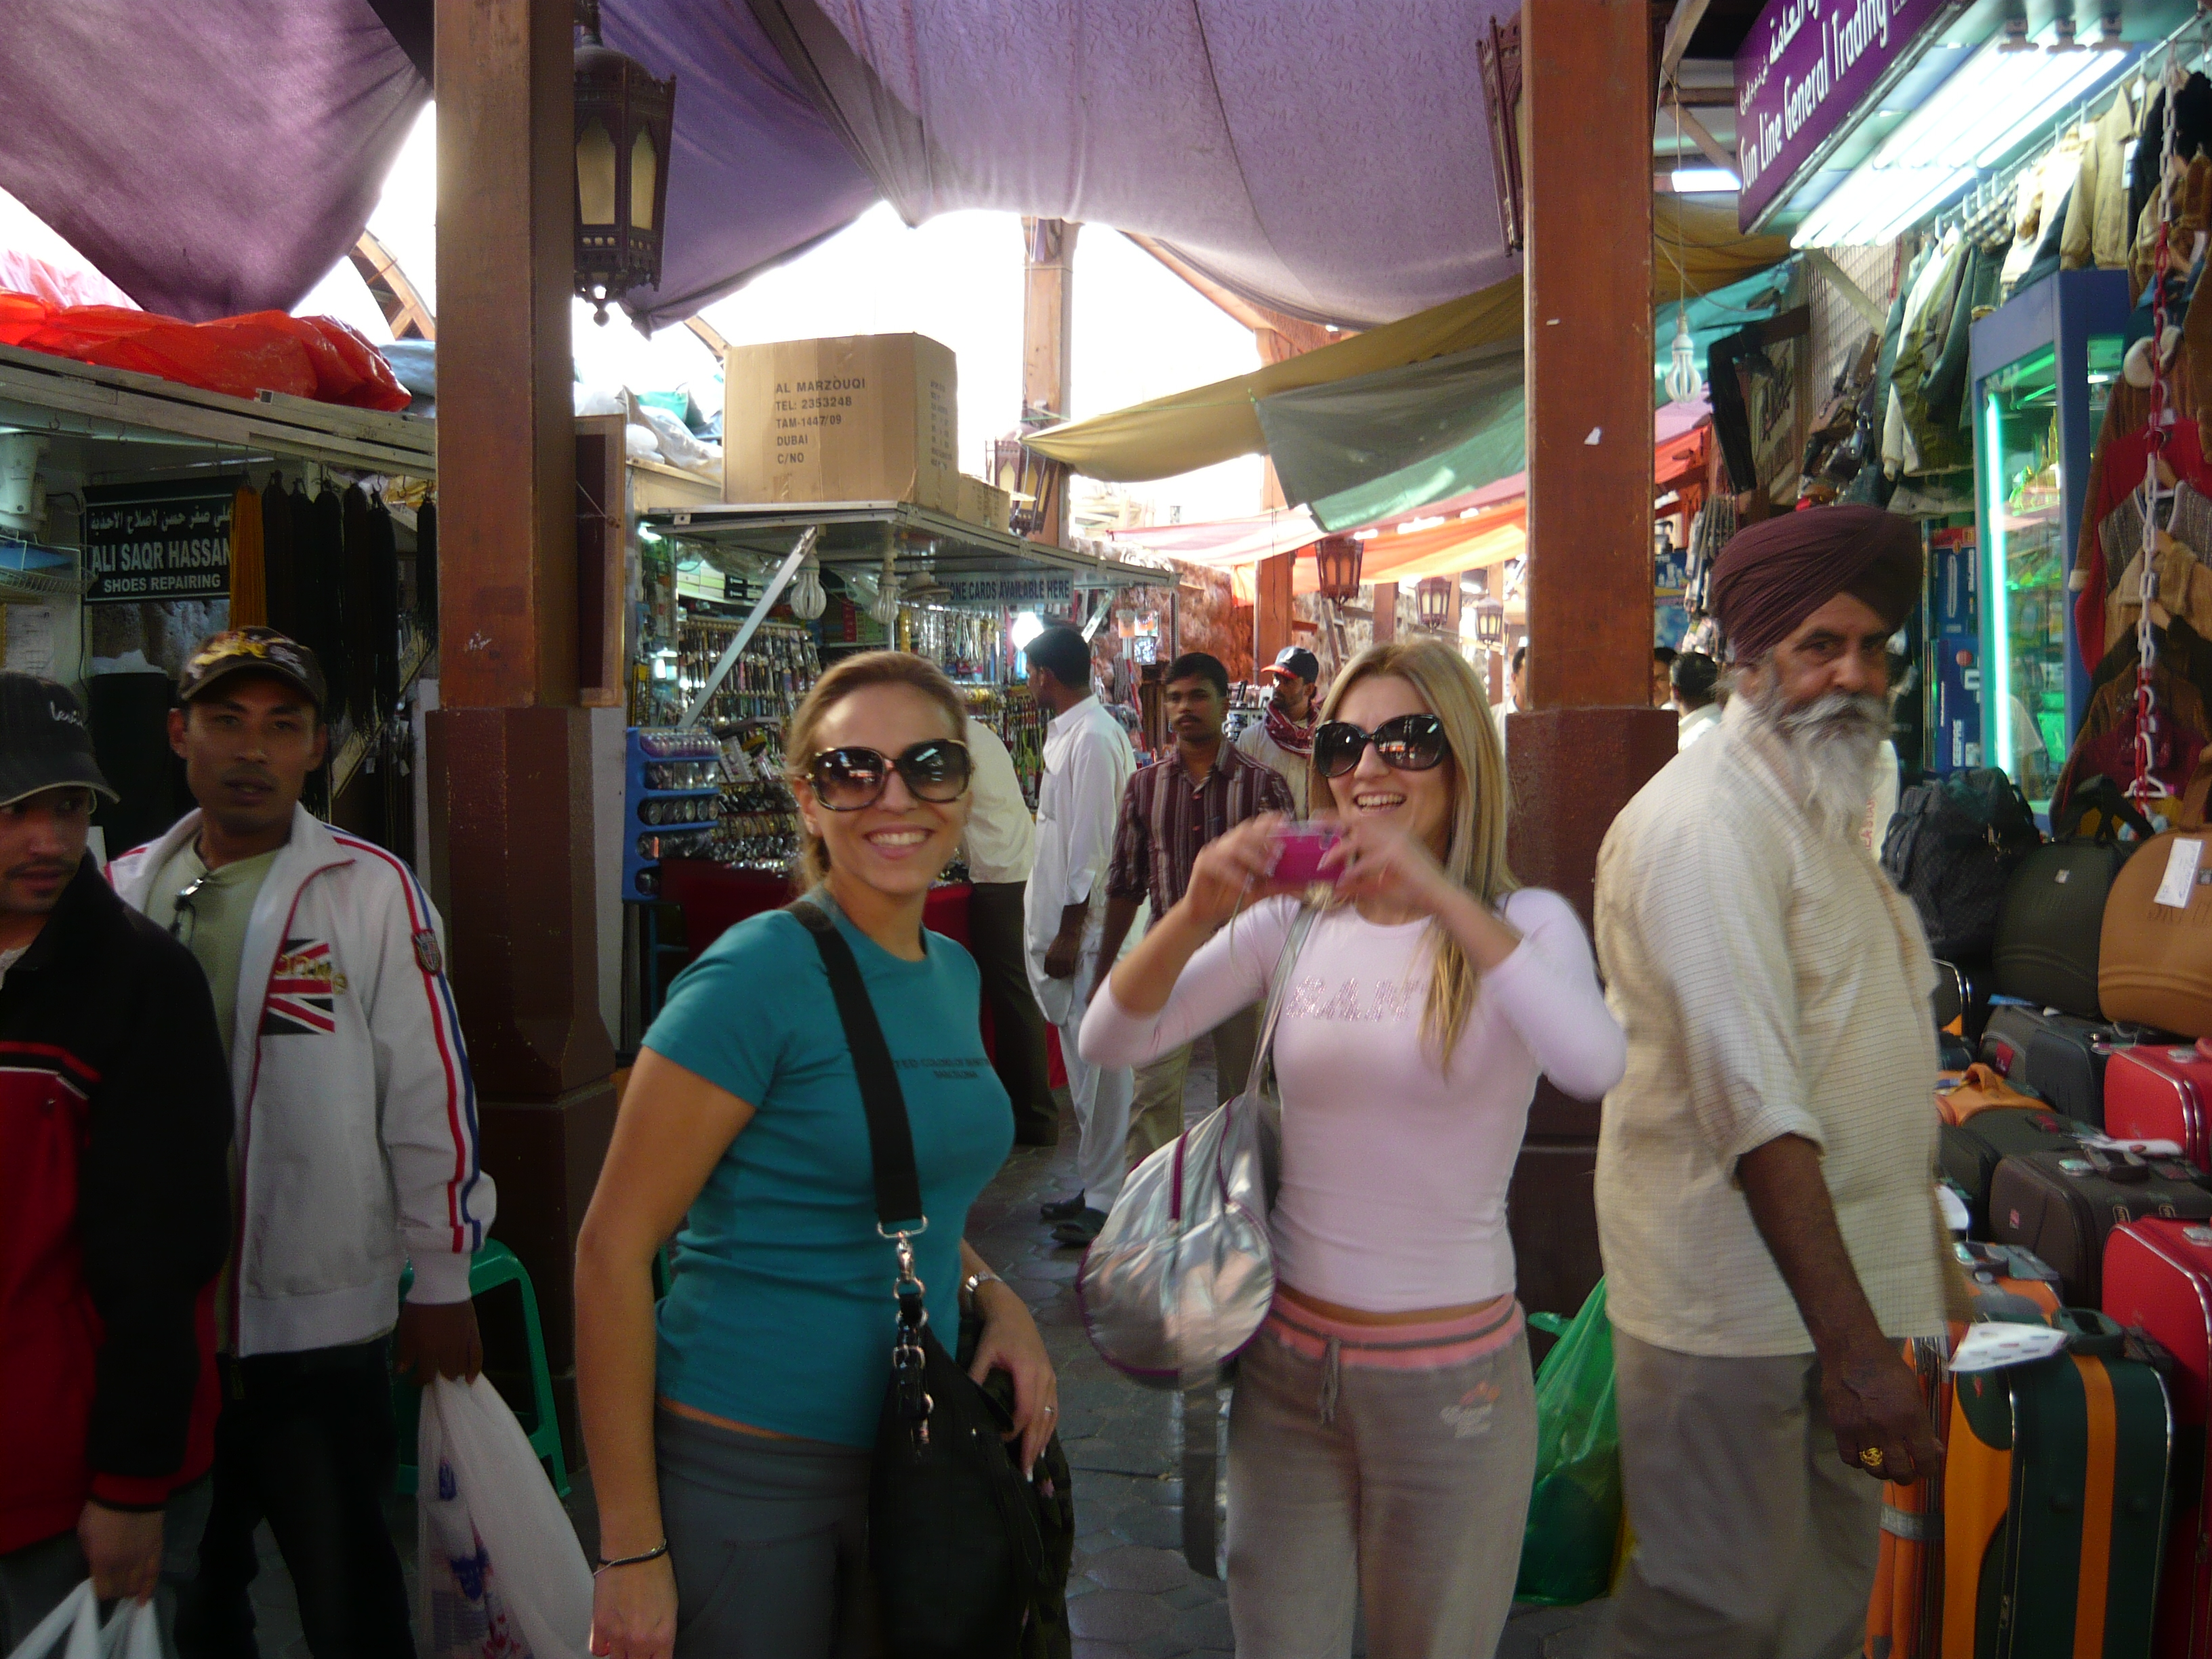 Dubai Souq traditional market